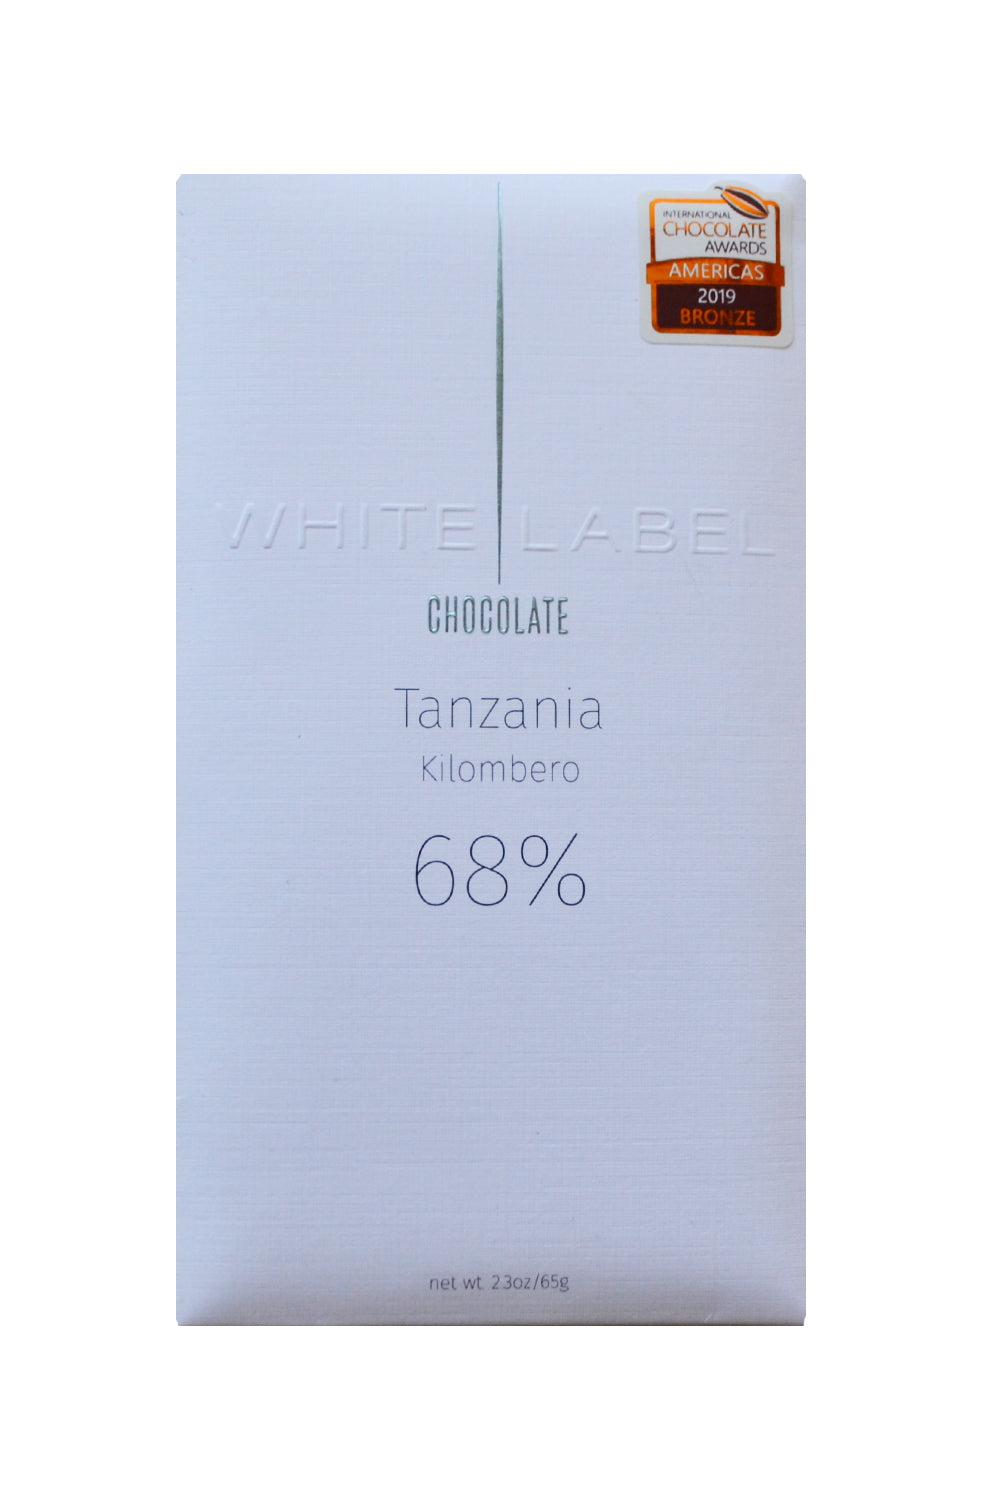 White Label Dark Chocolate Tanzania